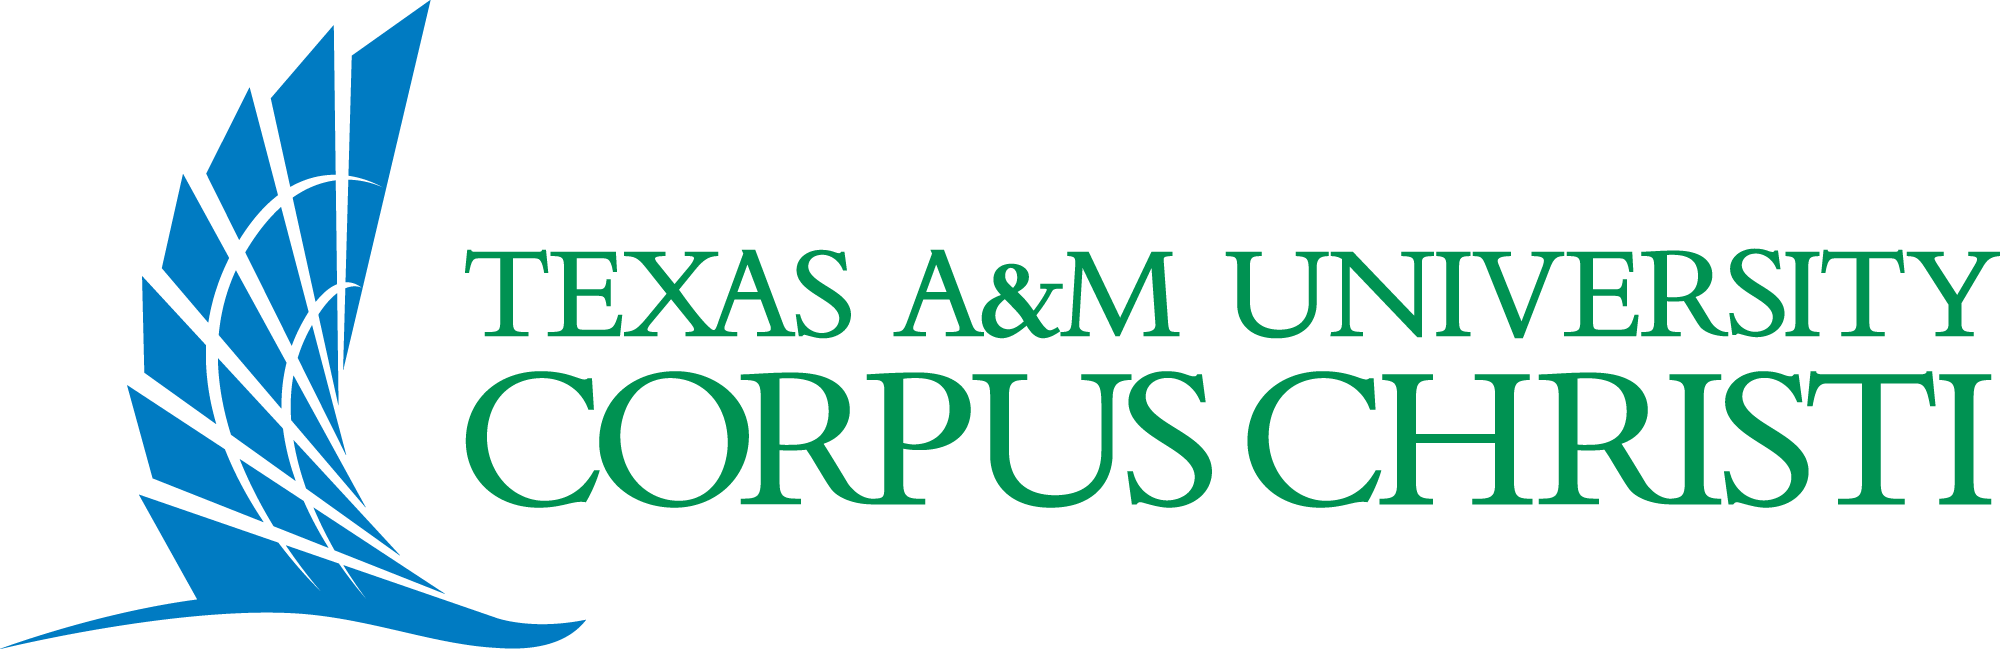 Texas A&M University-Corpus Christi Home